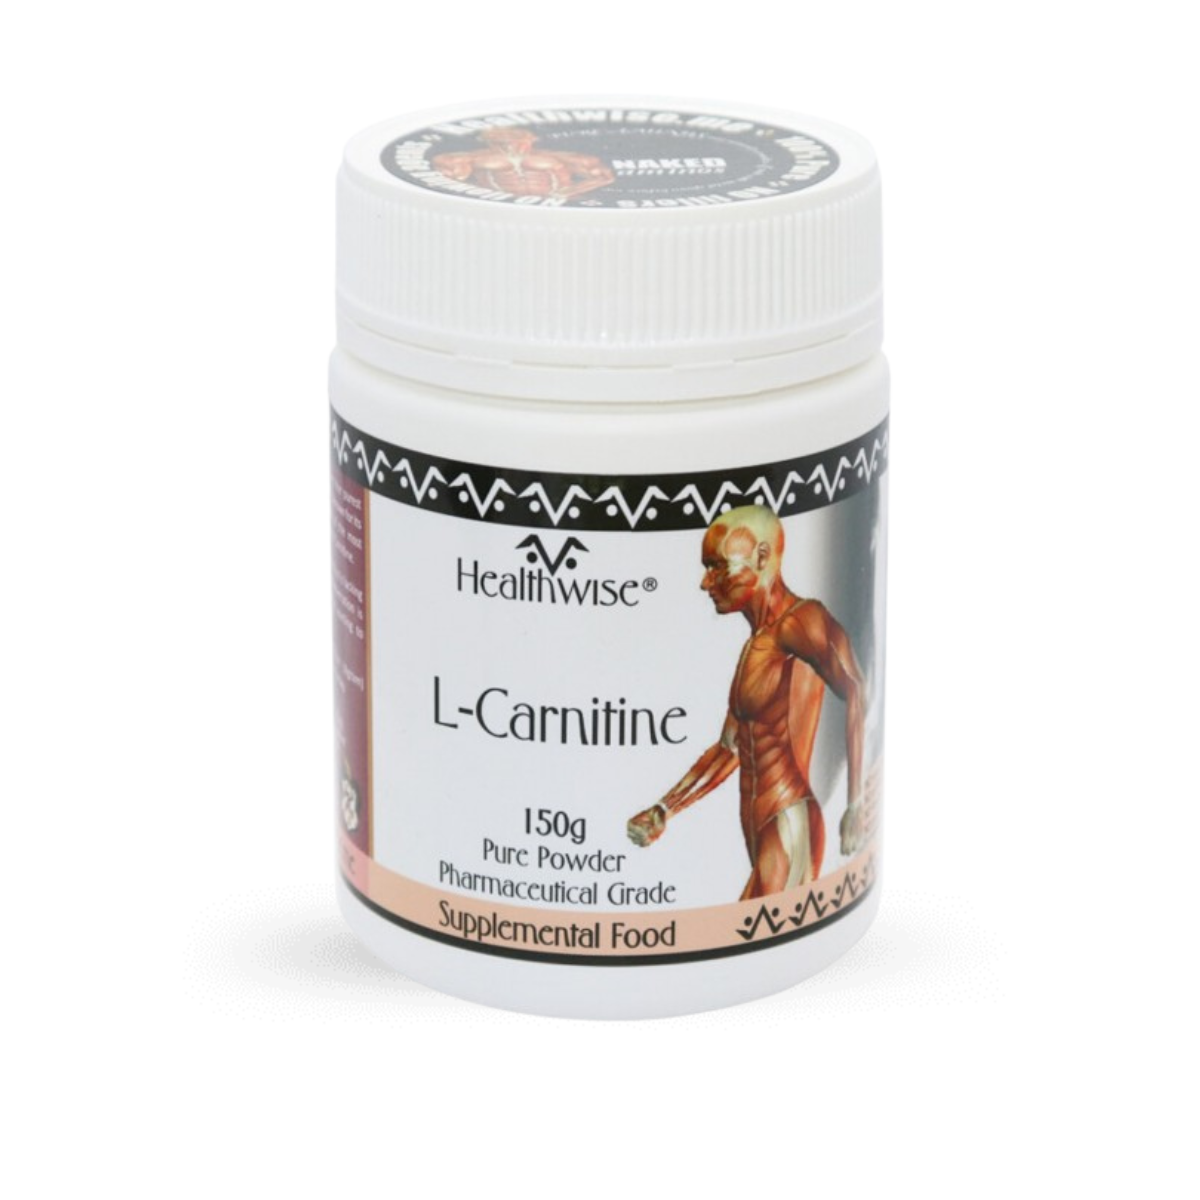 HealthWise L-Carnitine Powder 150g